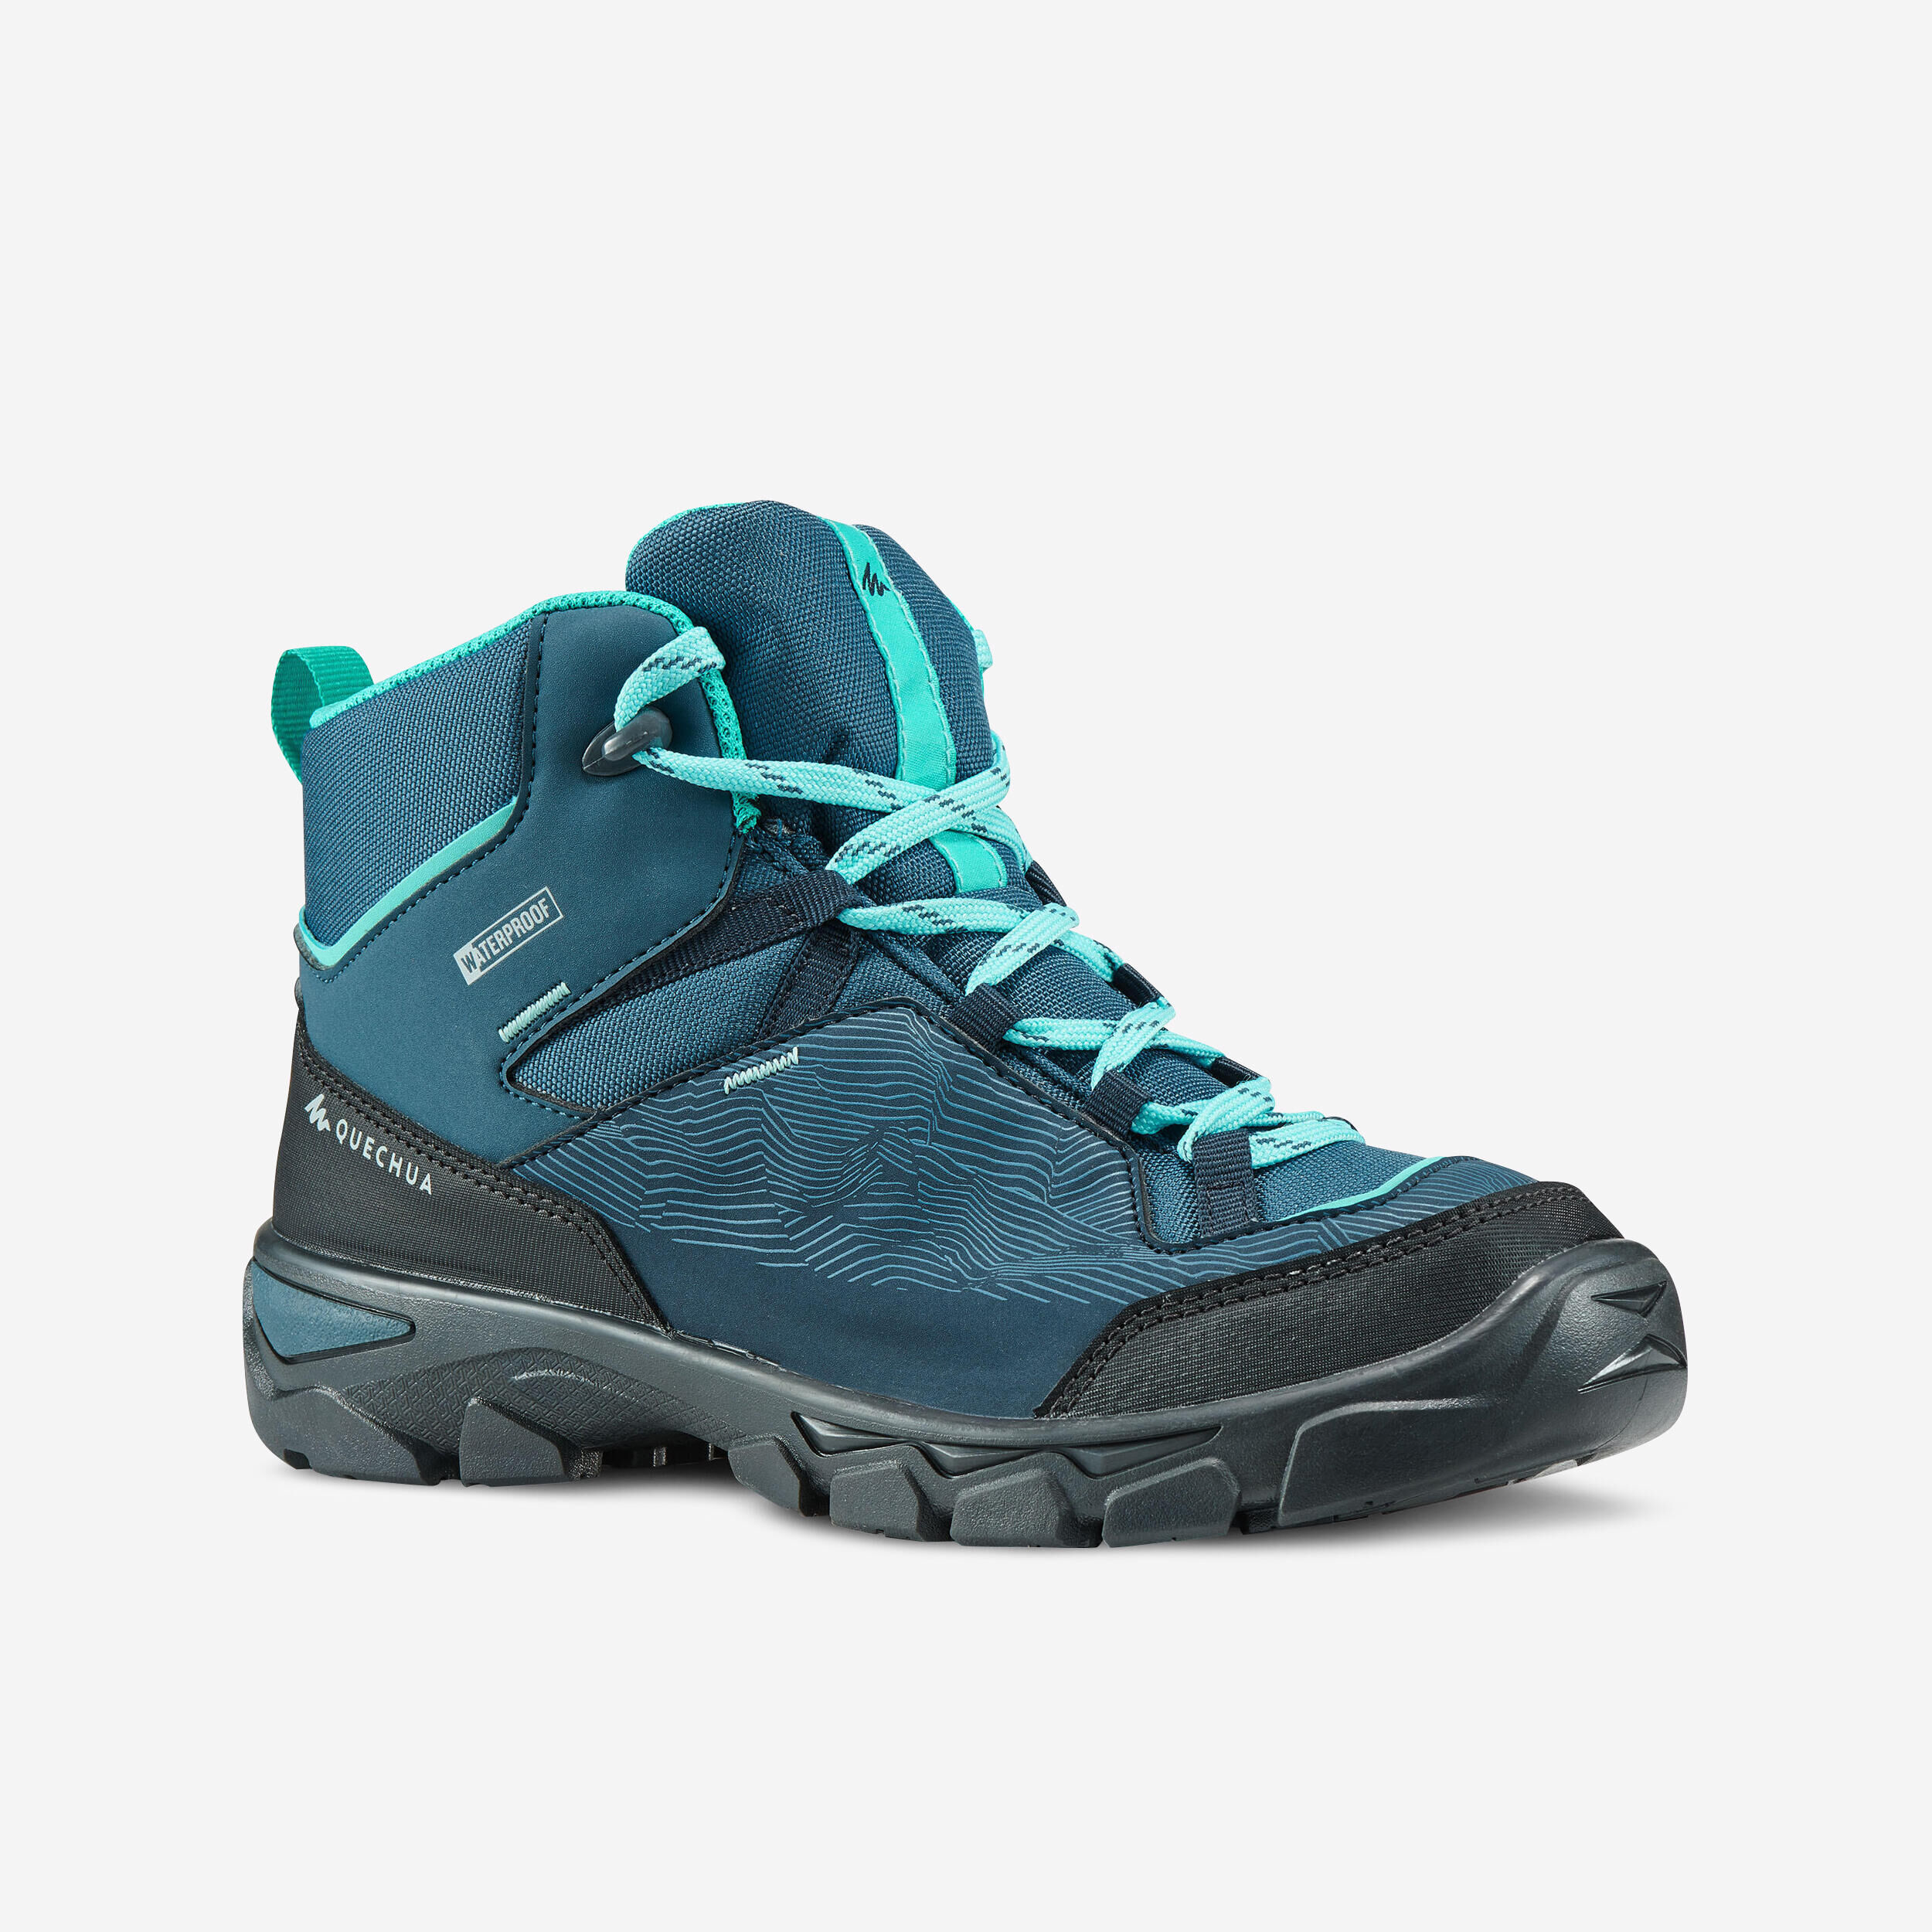 QUECHUA Chidren's waterproof walking shoes - MH120 MID Turquoise - size 3-5